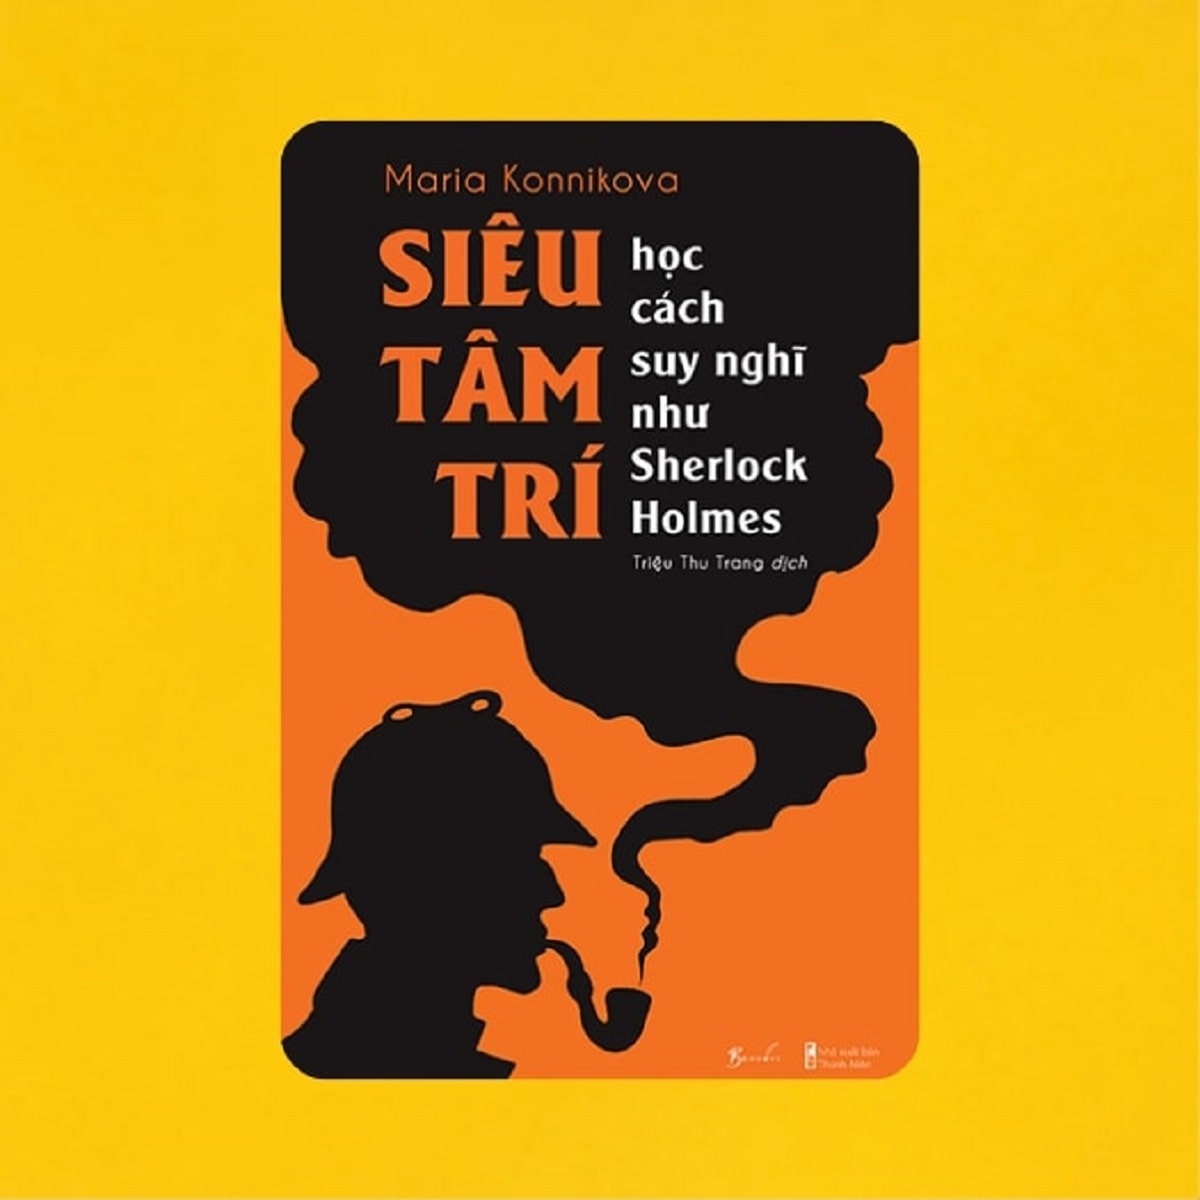 Review-Sieu-Tam-Tri-Hoc-Cach-Suy-Nghi-Nhu-Sherlock-min